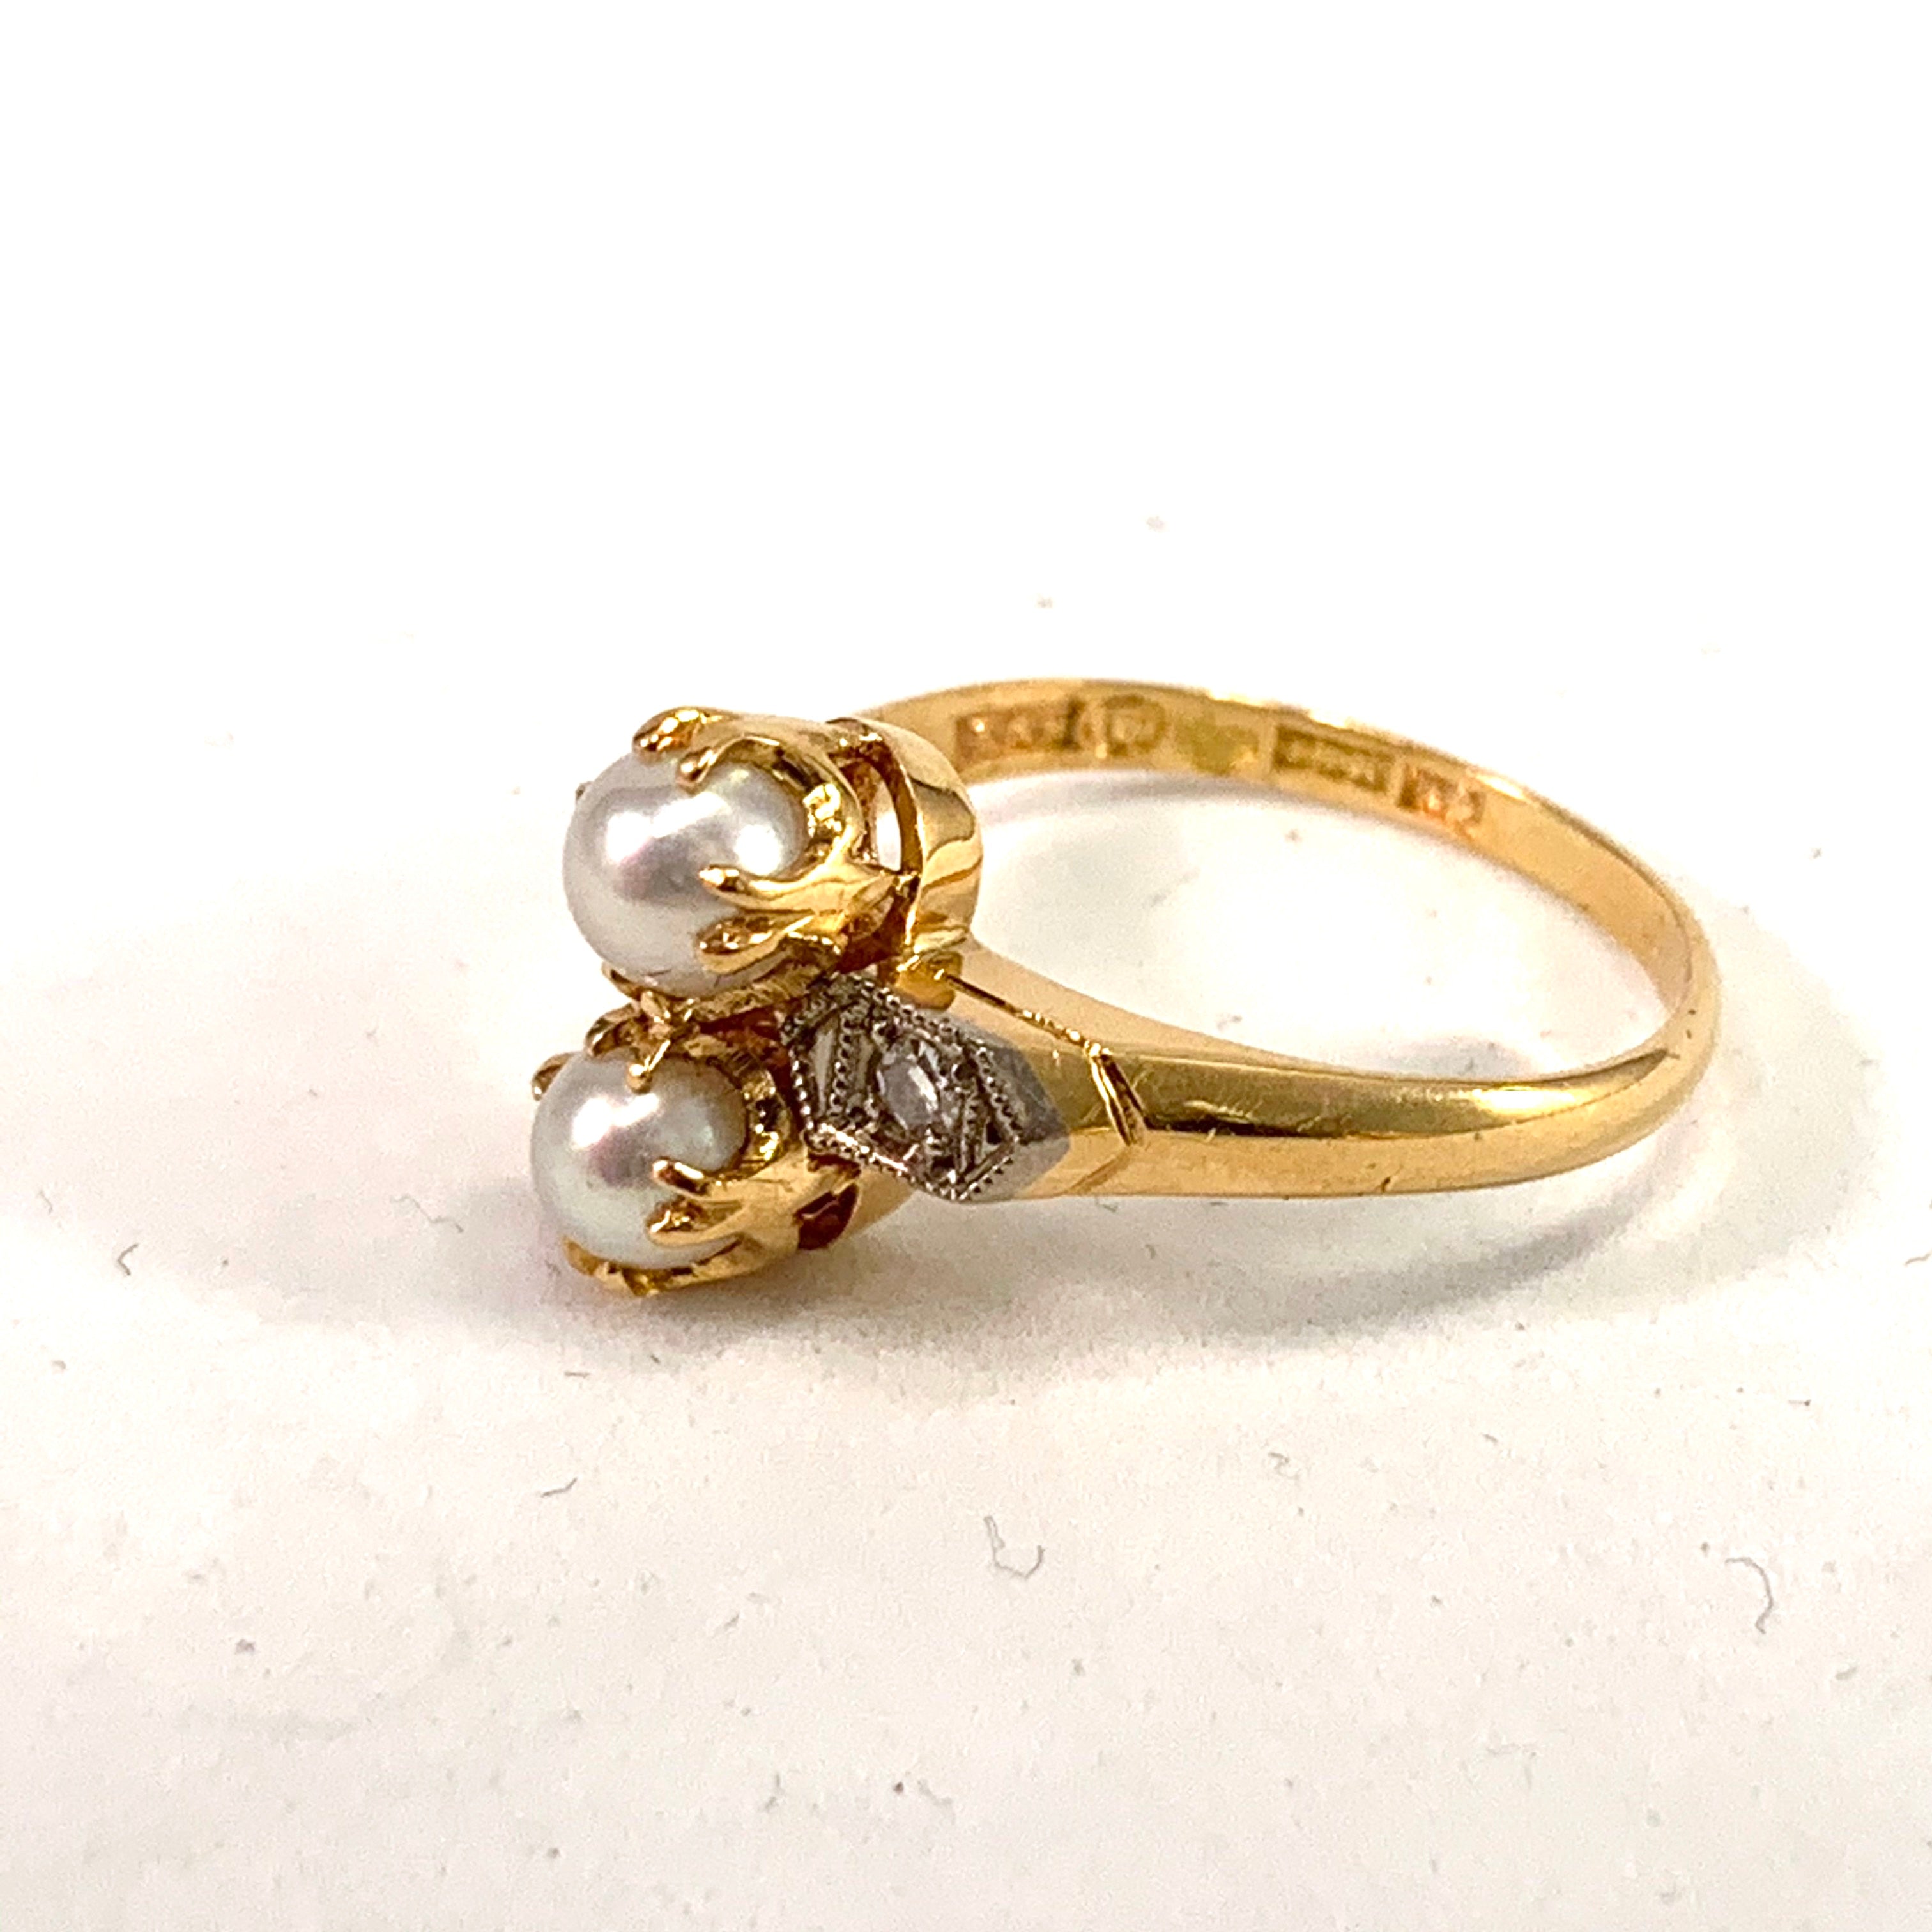 Vintage Mid Century 18k Gold Diamond Pearl Ring.